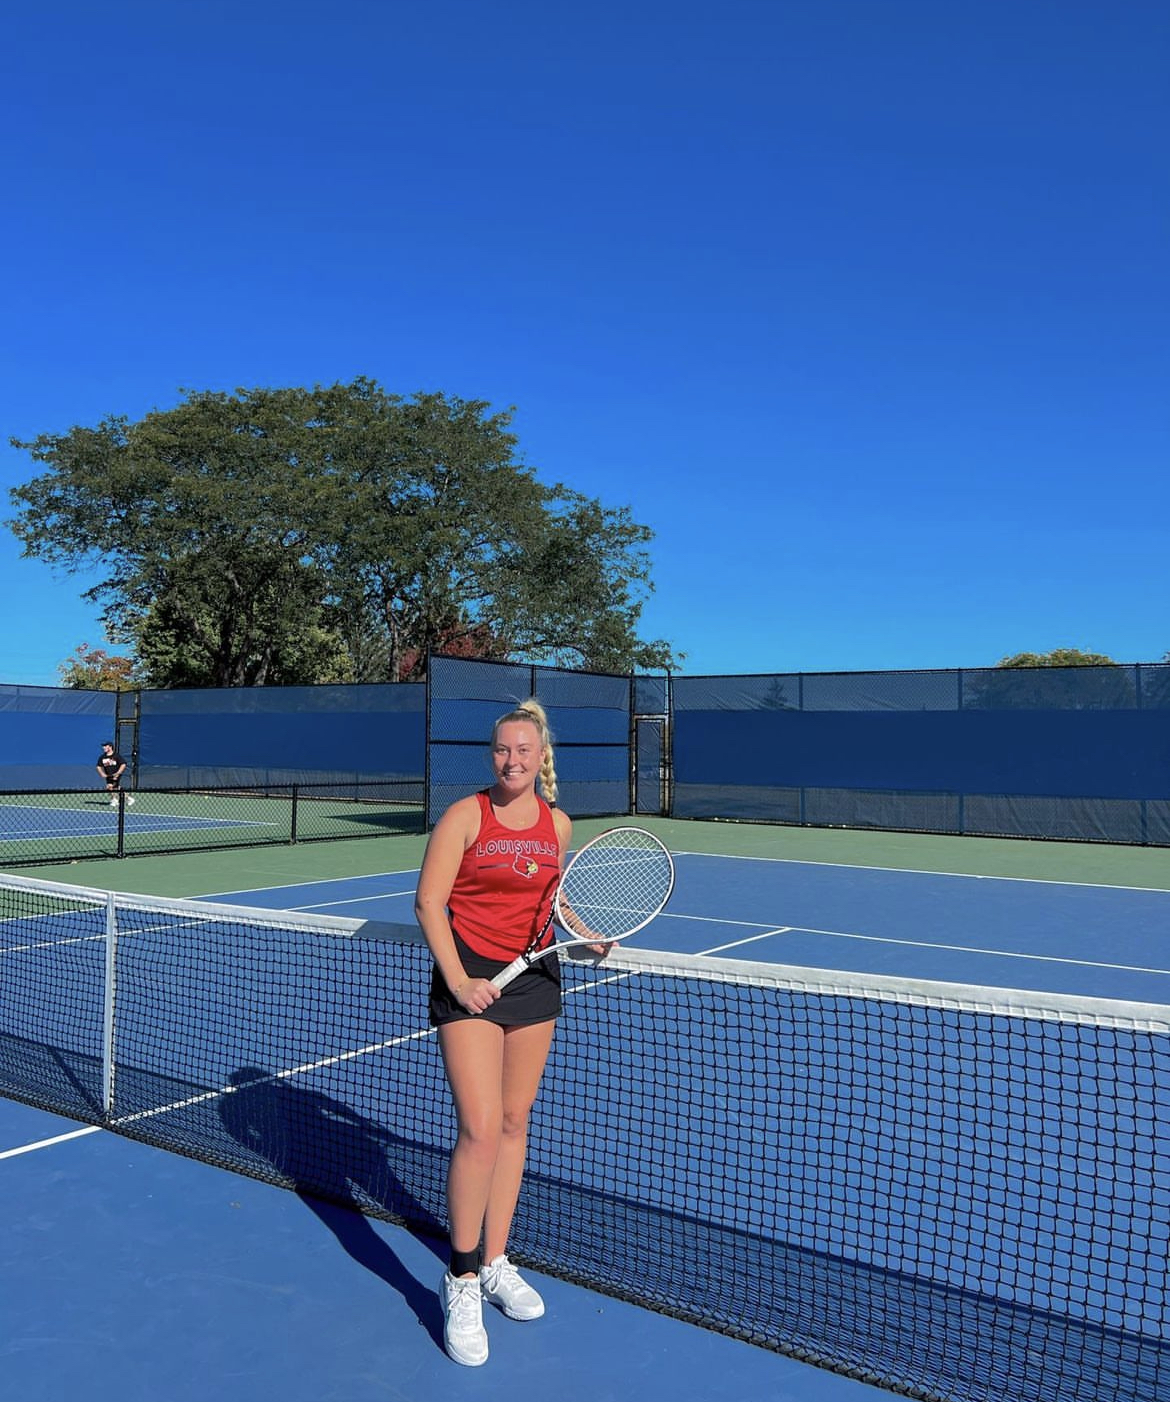 Amara S. teaches tennis lessons in Louisville, KY